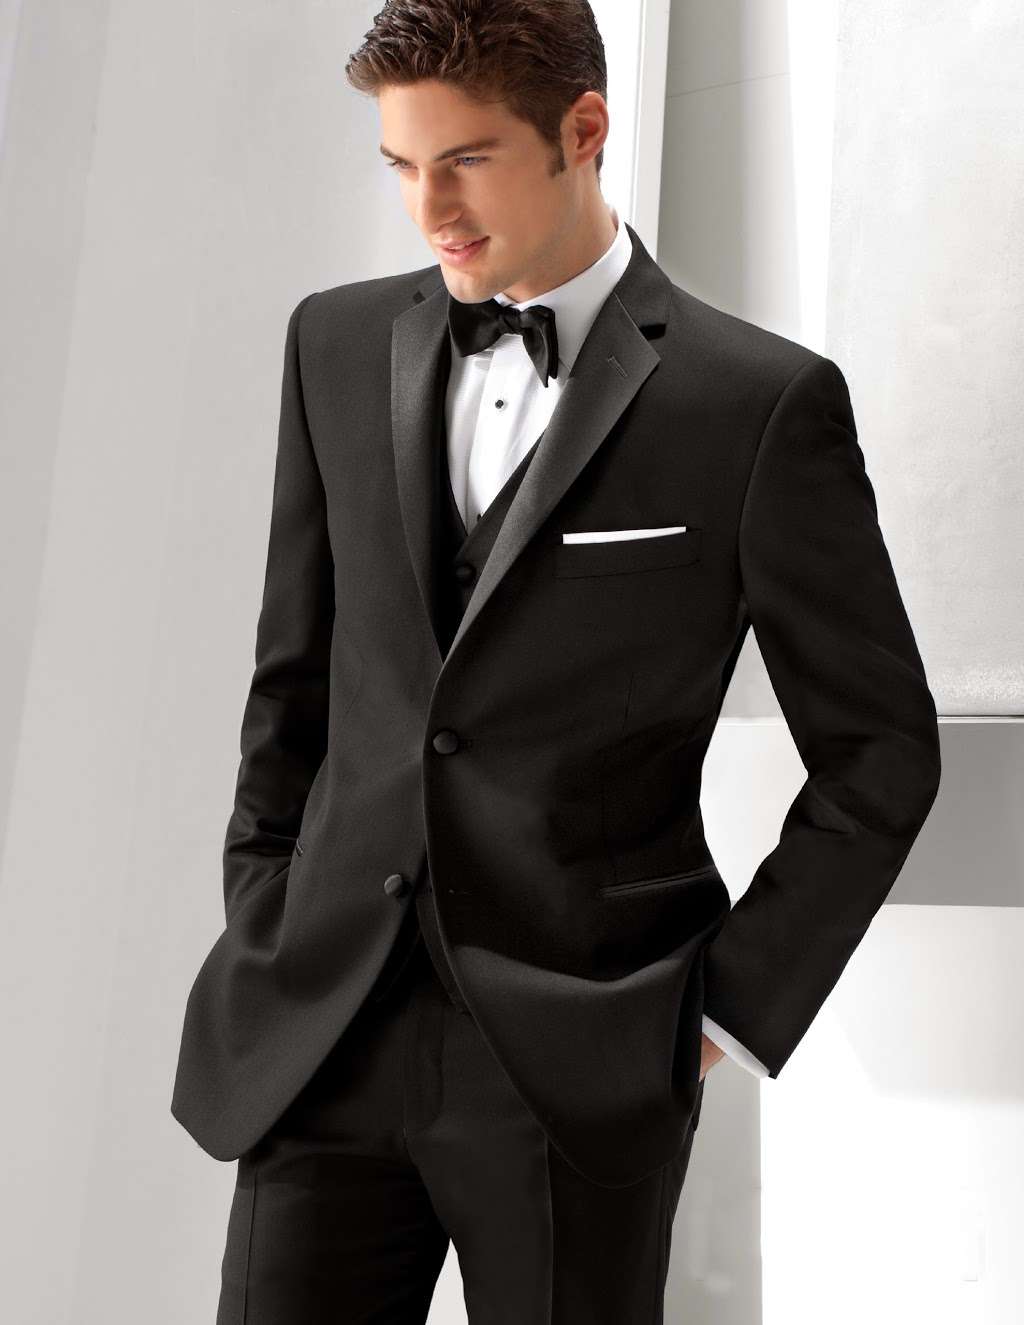 Black Tie Formalwear | 544 E 162nd St, South Holland, IL 60473 | Phone: (708) 596-6330